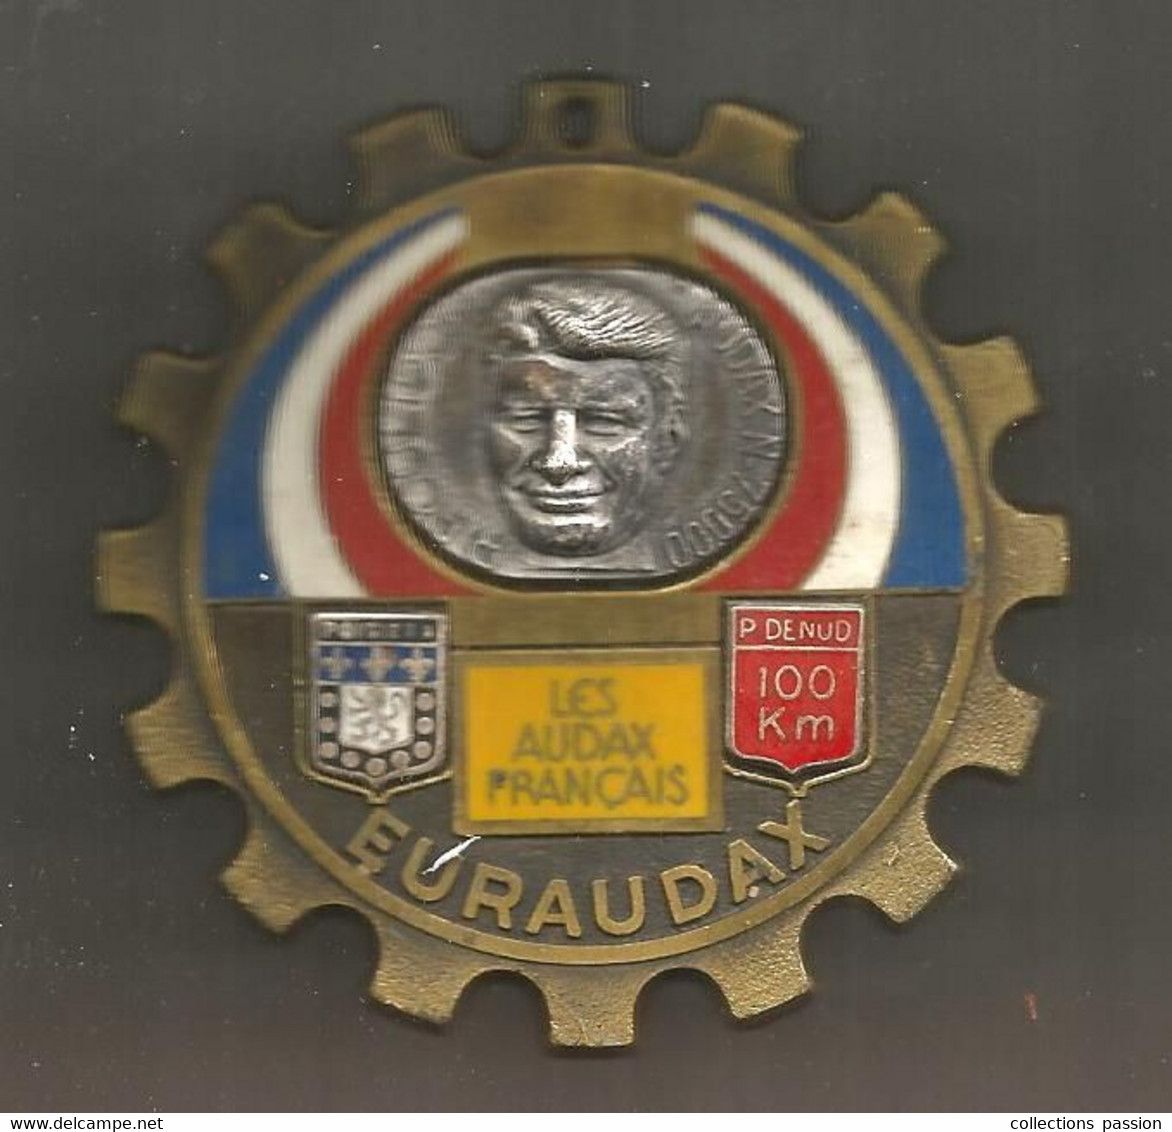 Médaille , Sports , Cyclisme, EURAUDAX , Les AUDAX FRANCAIS, R. Poulidor , 1979 , 72 Gr. , Frais Fr 3.35 - Ciclismo